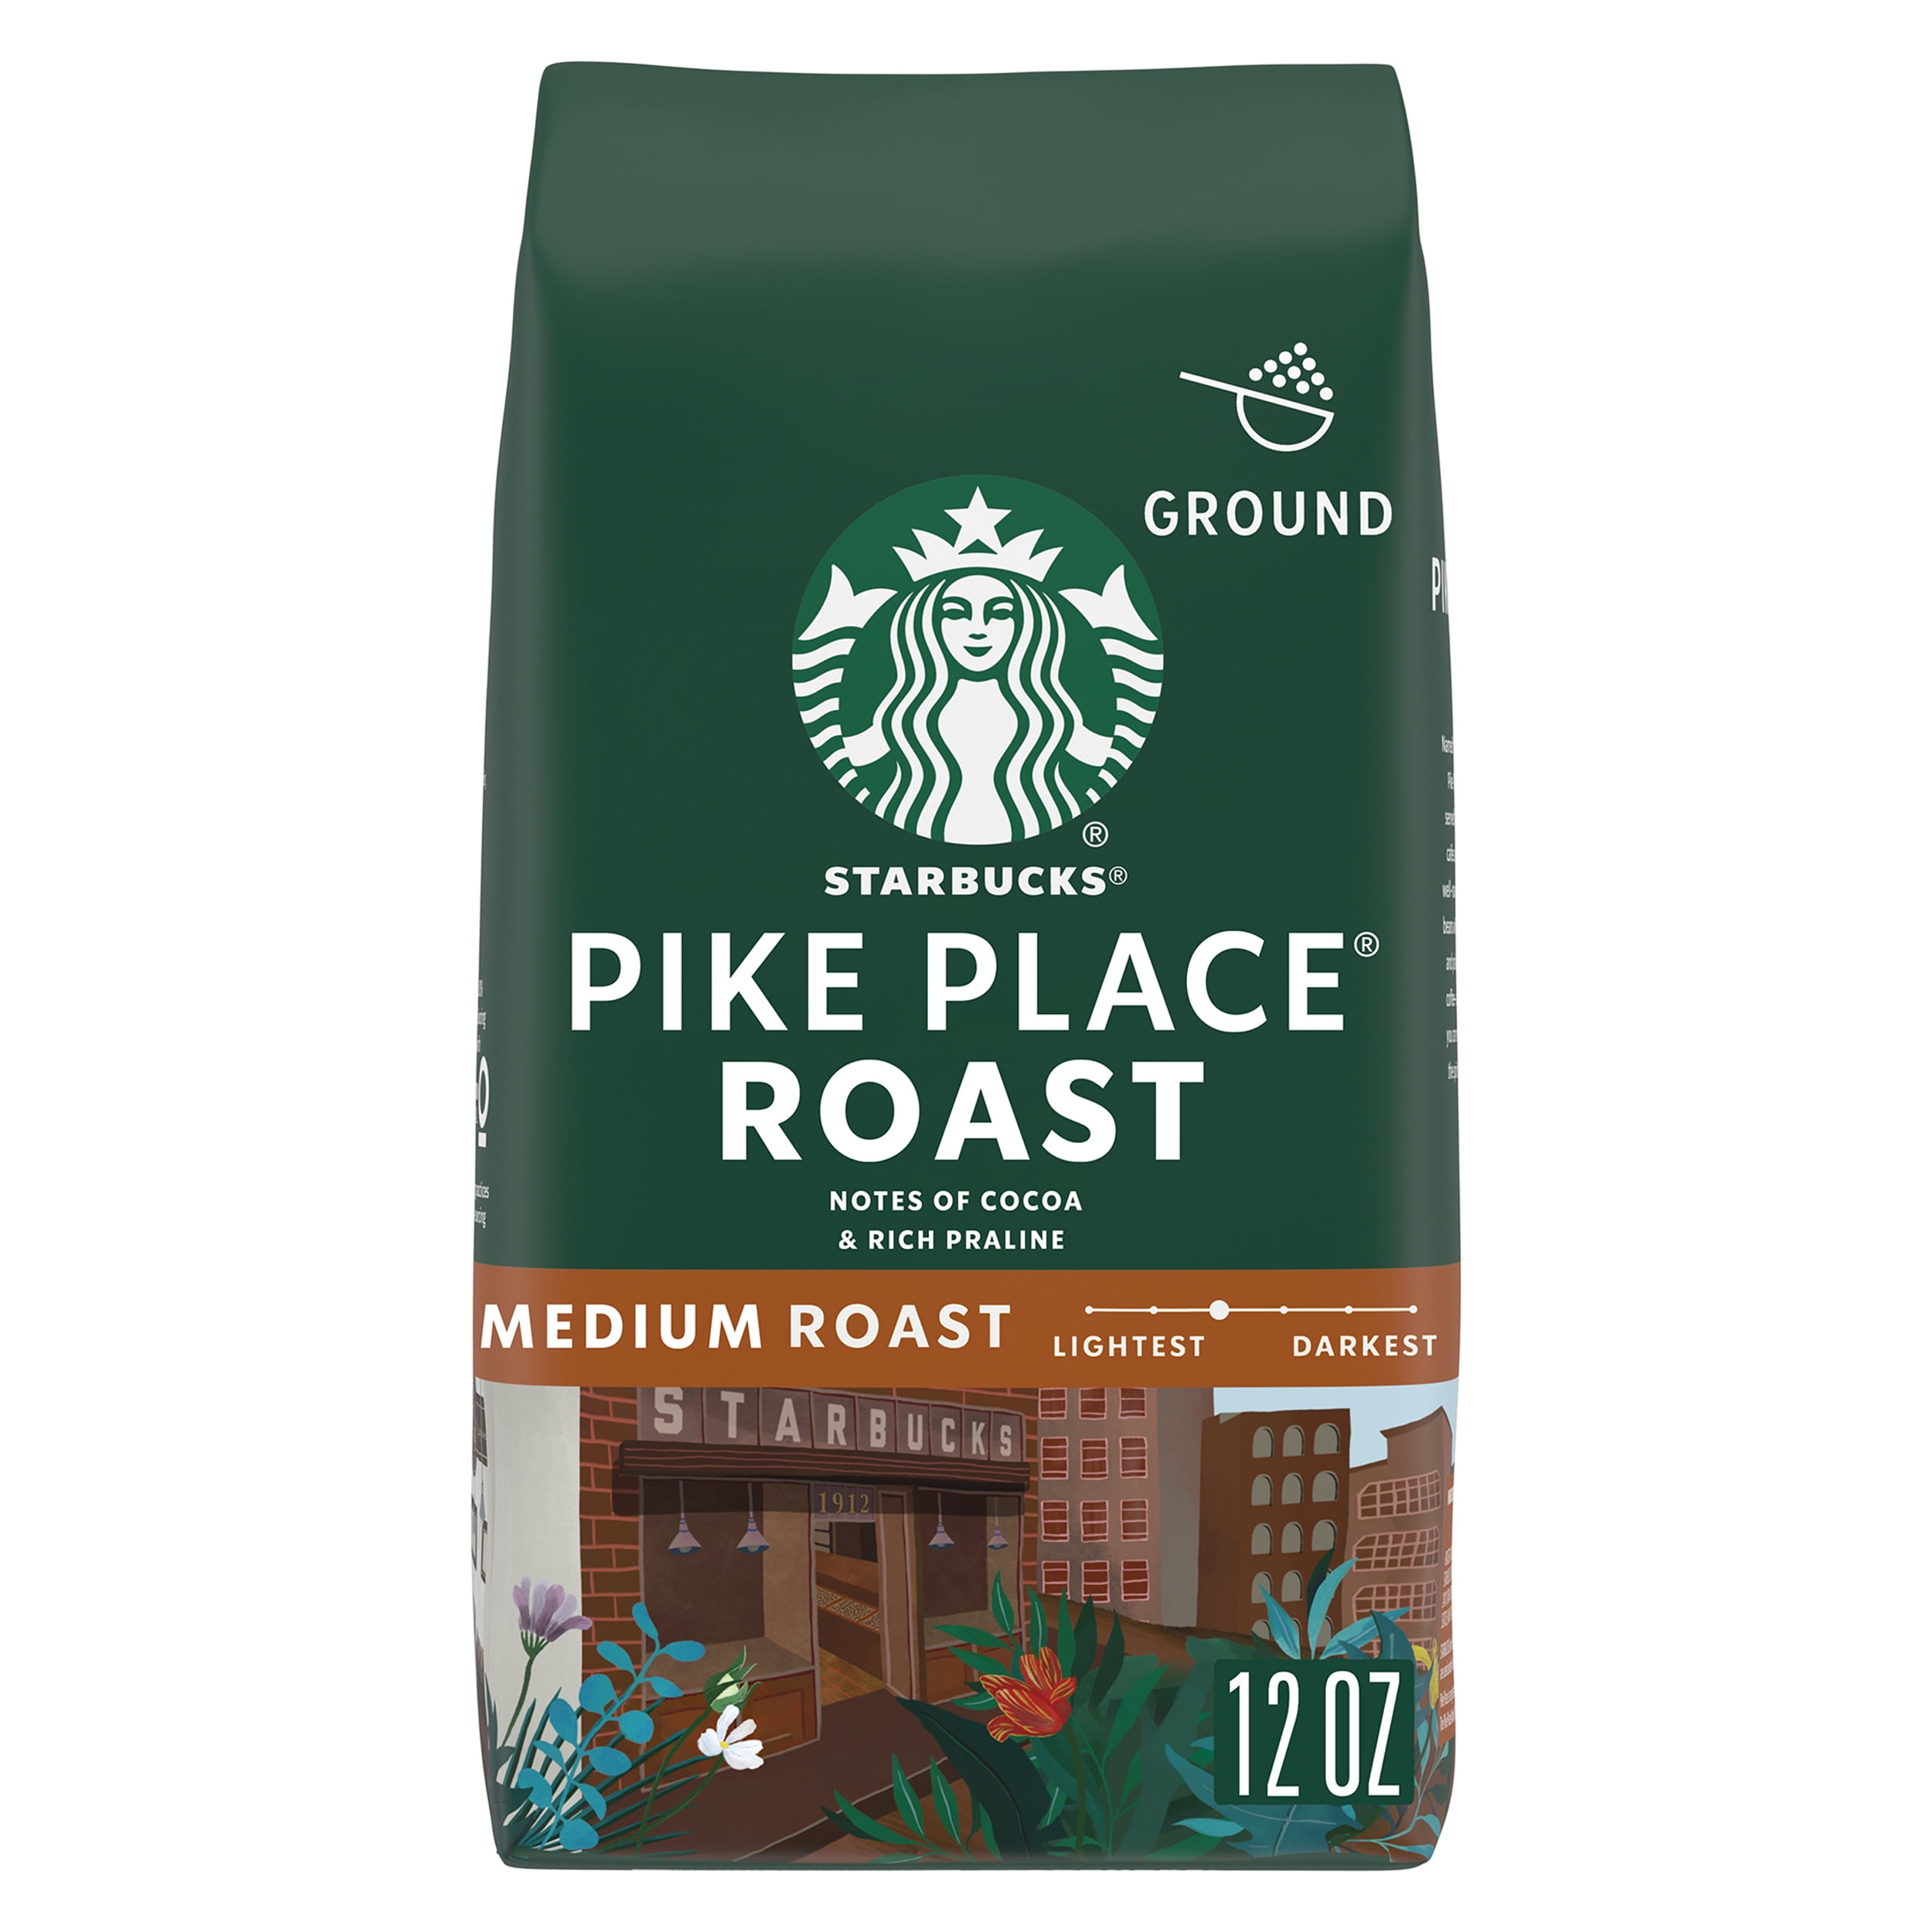 Starbucks Pike Place Roast, Ground Coffee, Medium Roast, 12 oz